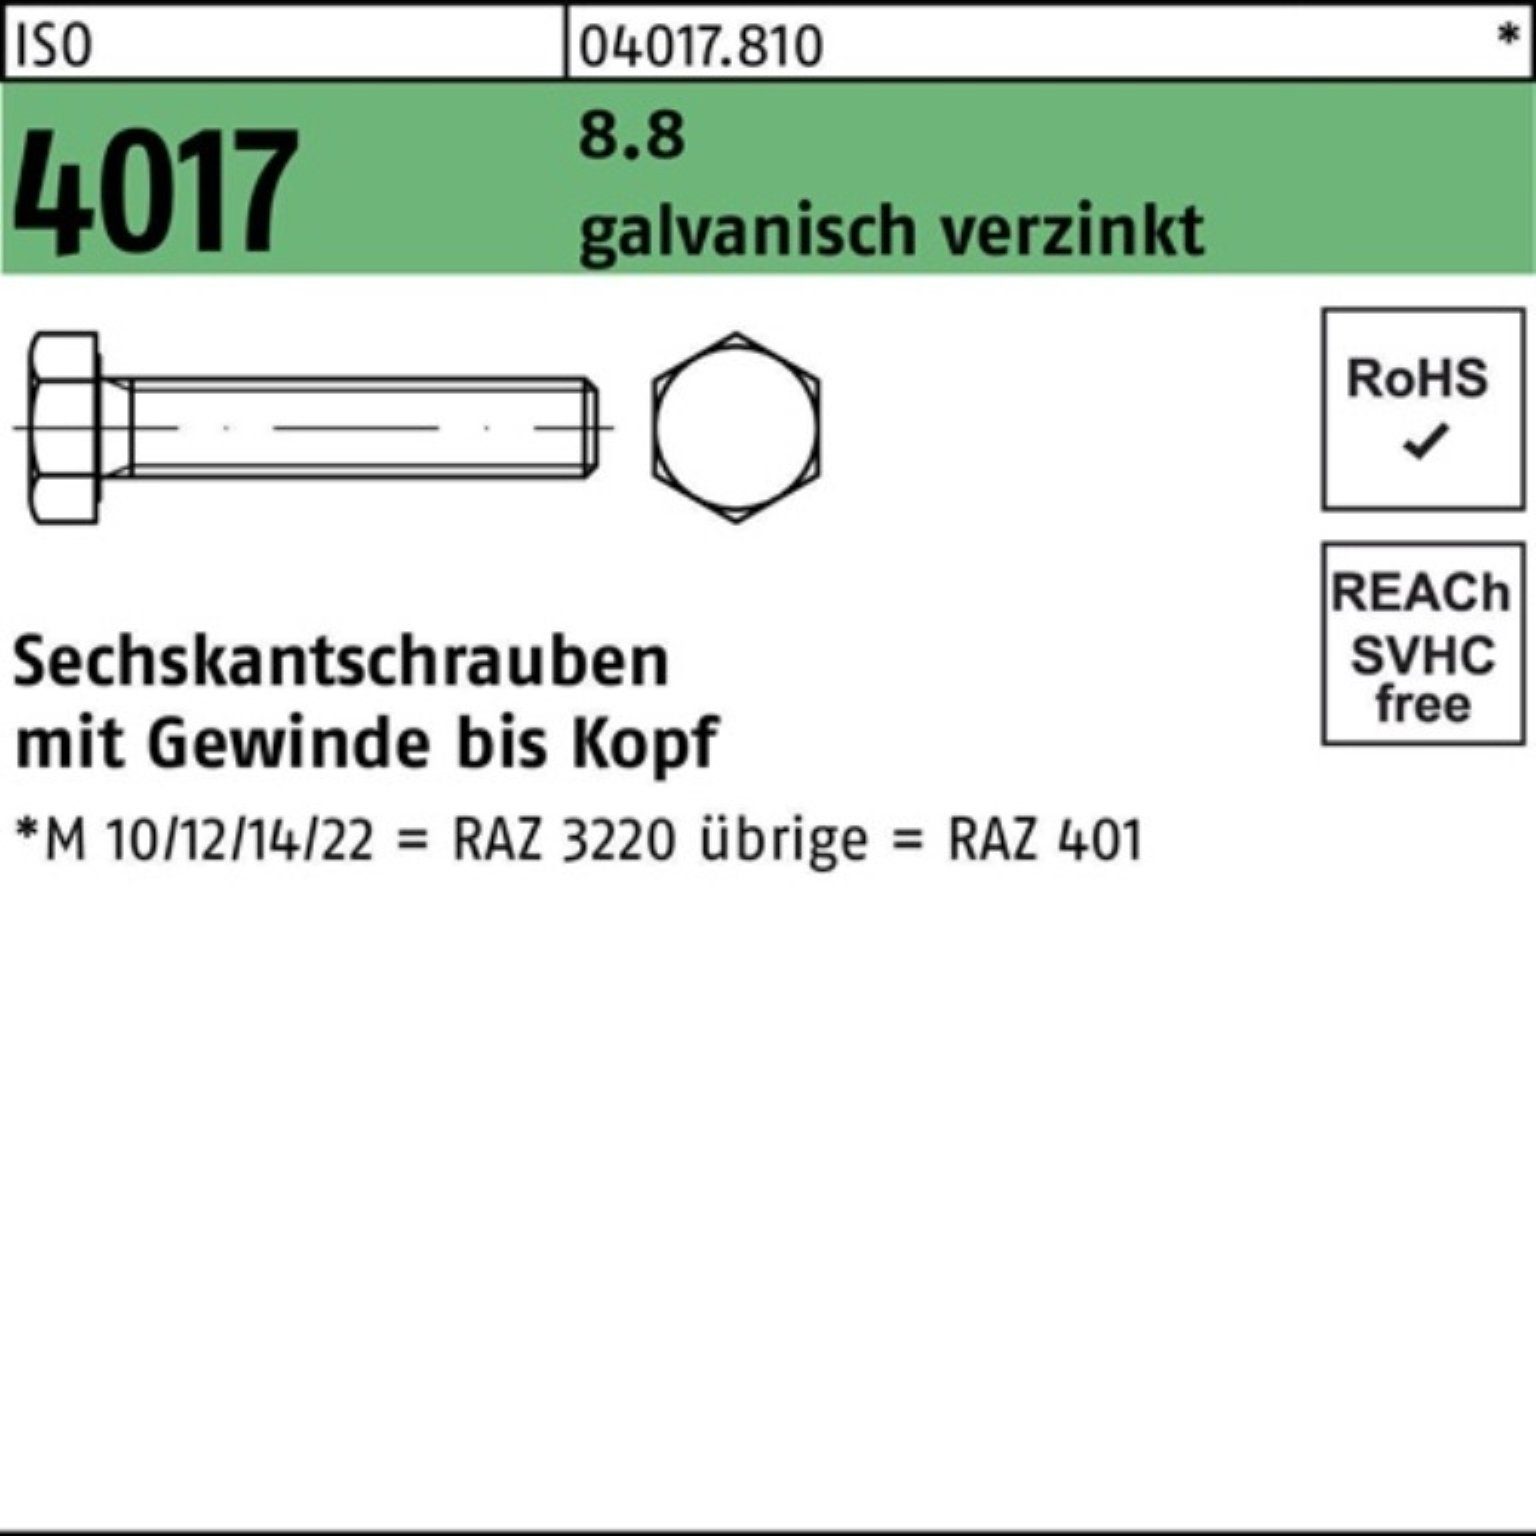 Bufab Sechskantschraube VG 1 8.8 galv.verz. 60 M36x 100er Sechskantschraube Pack 4017 Stü ISO